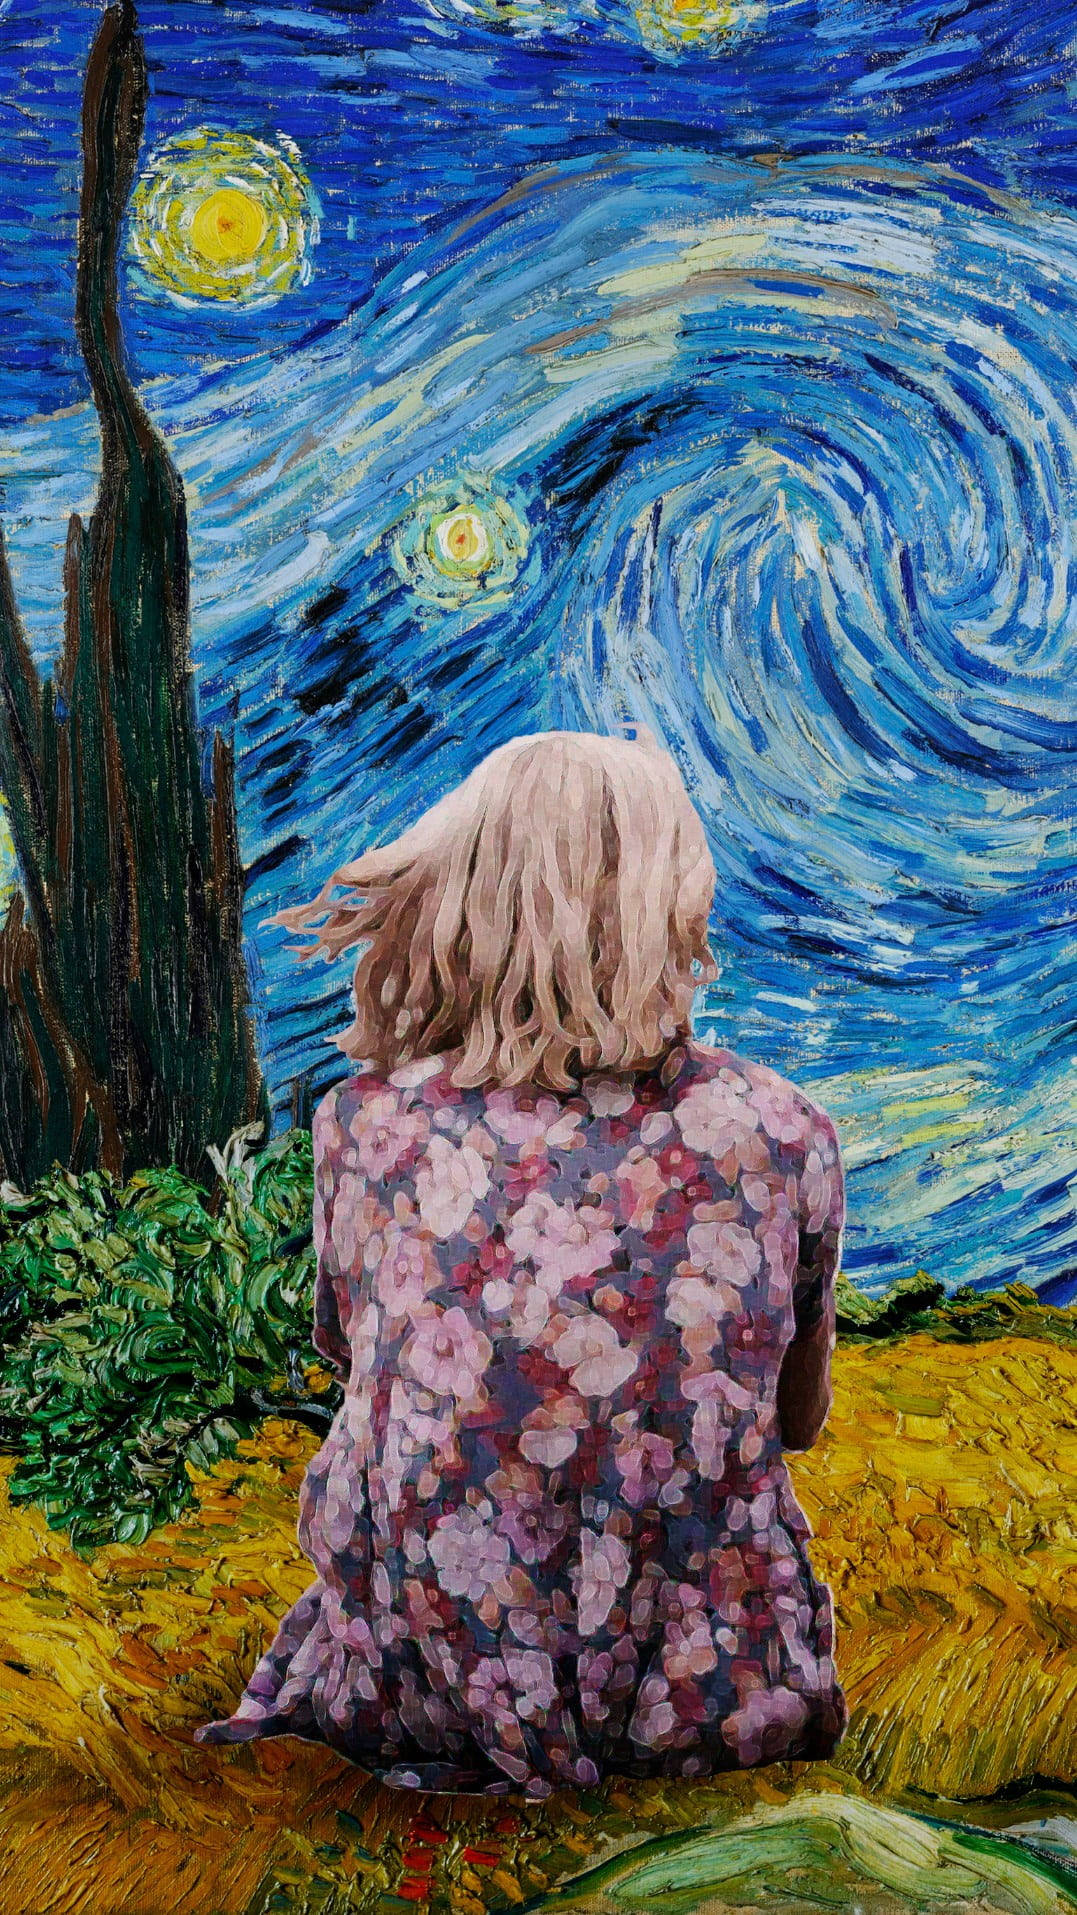 Starry Night' by Vincent Van Gogh Wallpaper Mural